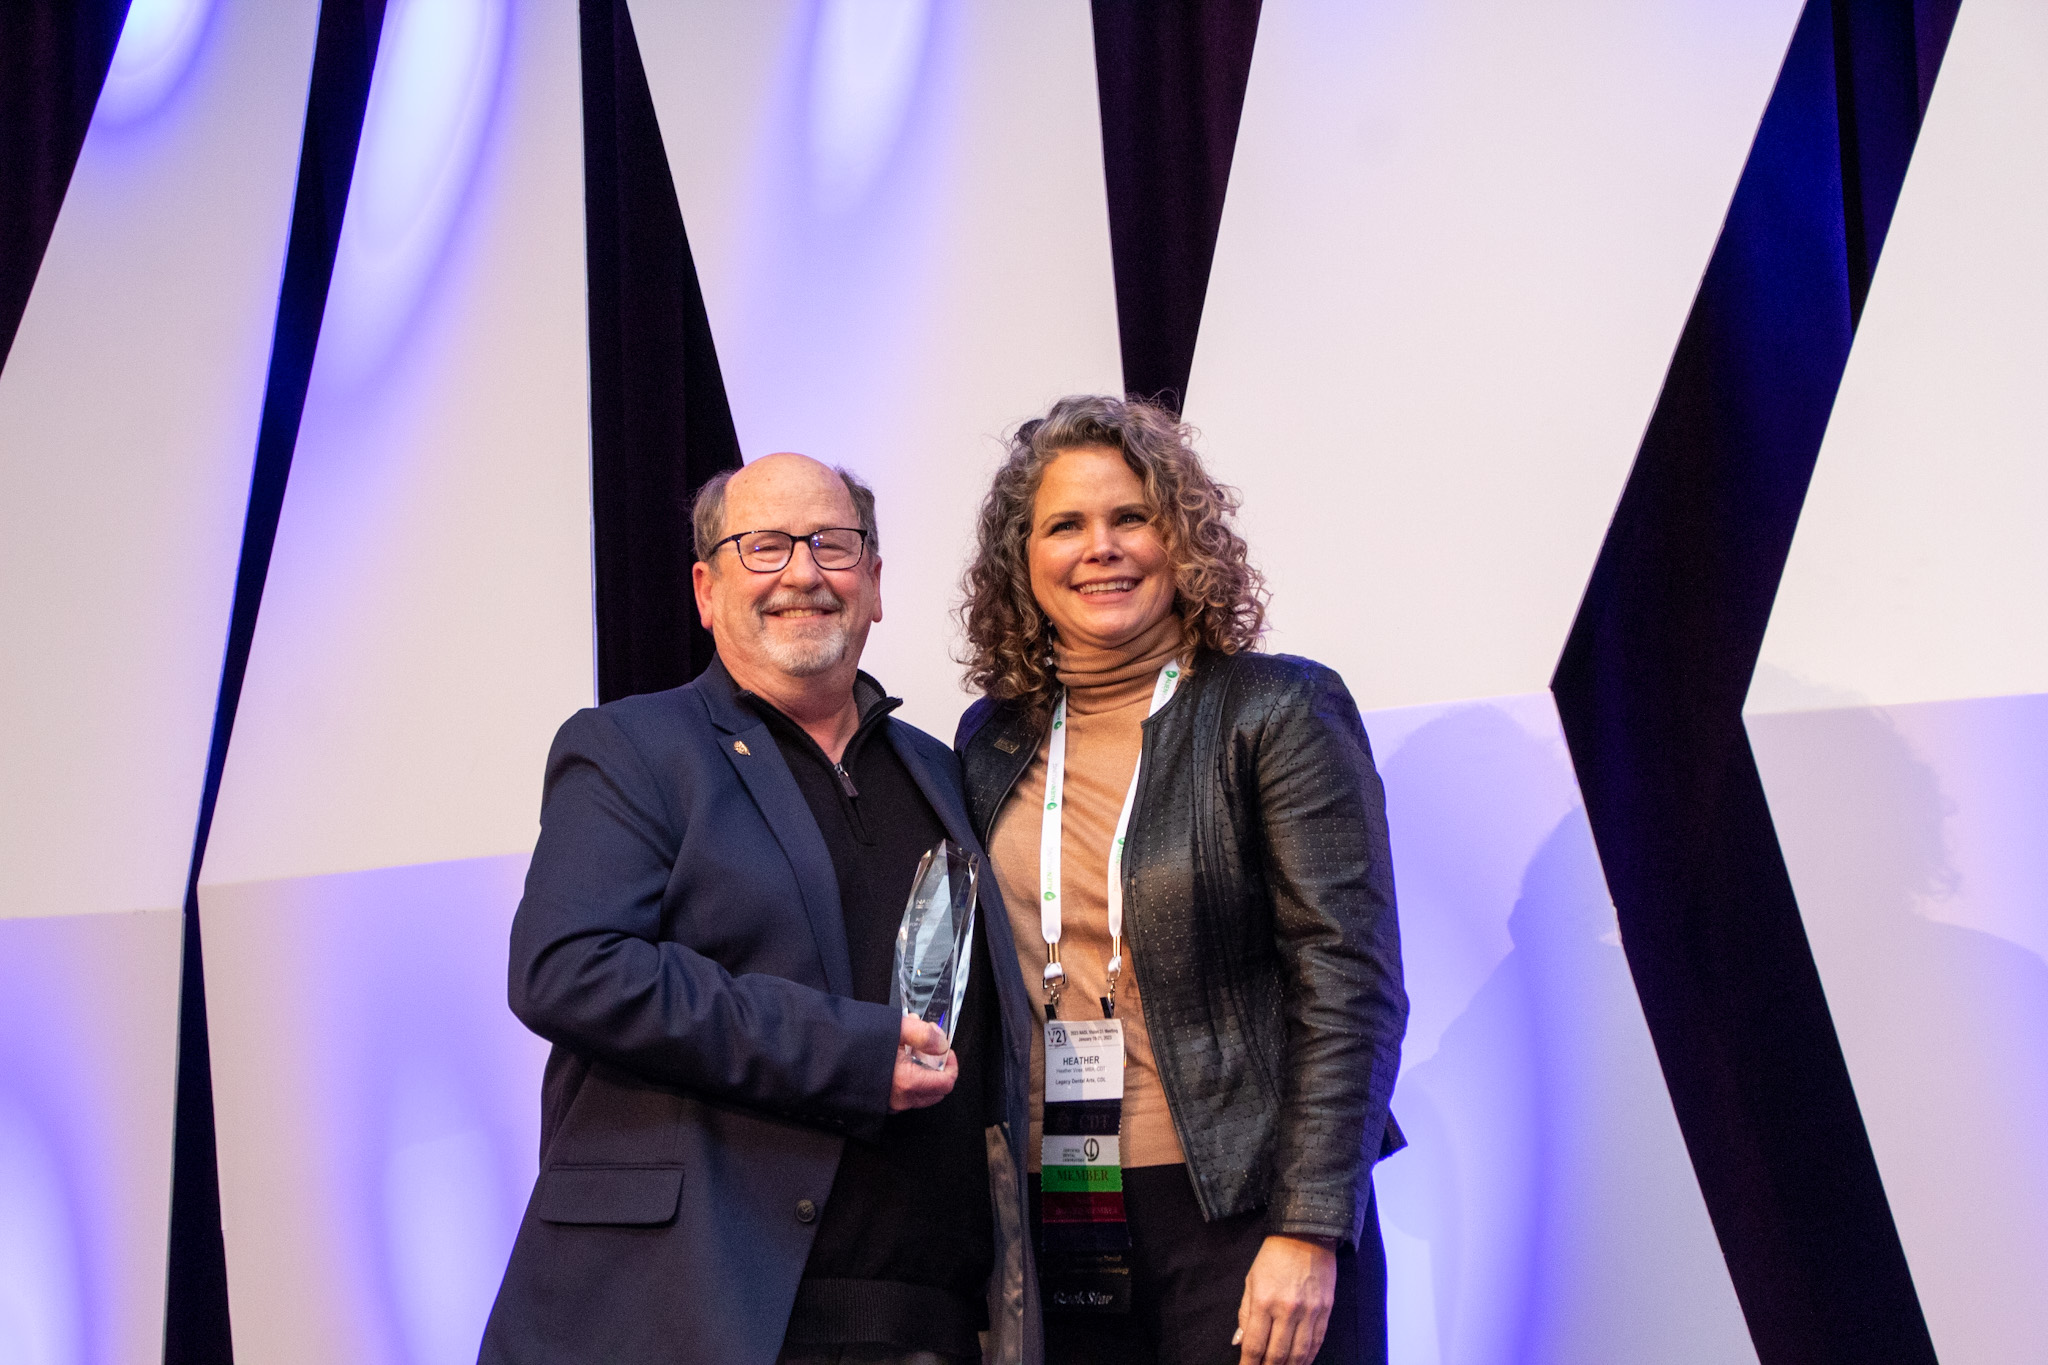 Gary Morgan receives merit award from Heather Voss NADL President